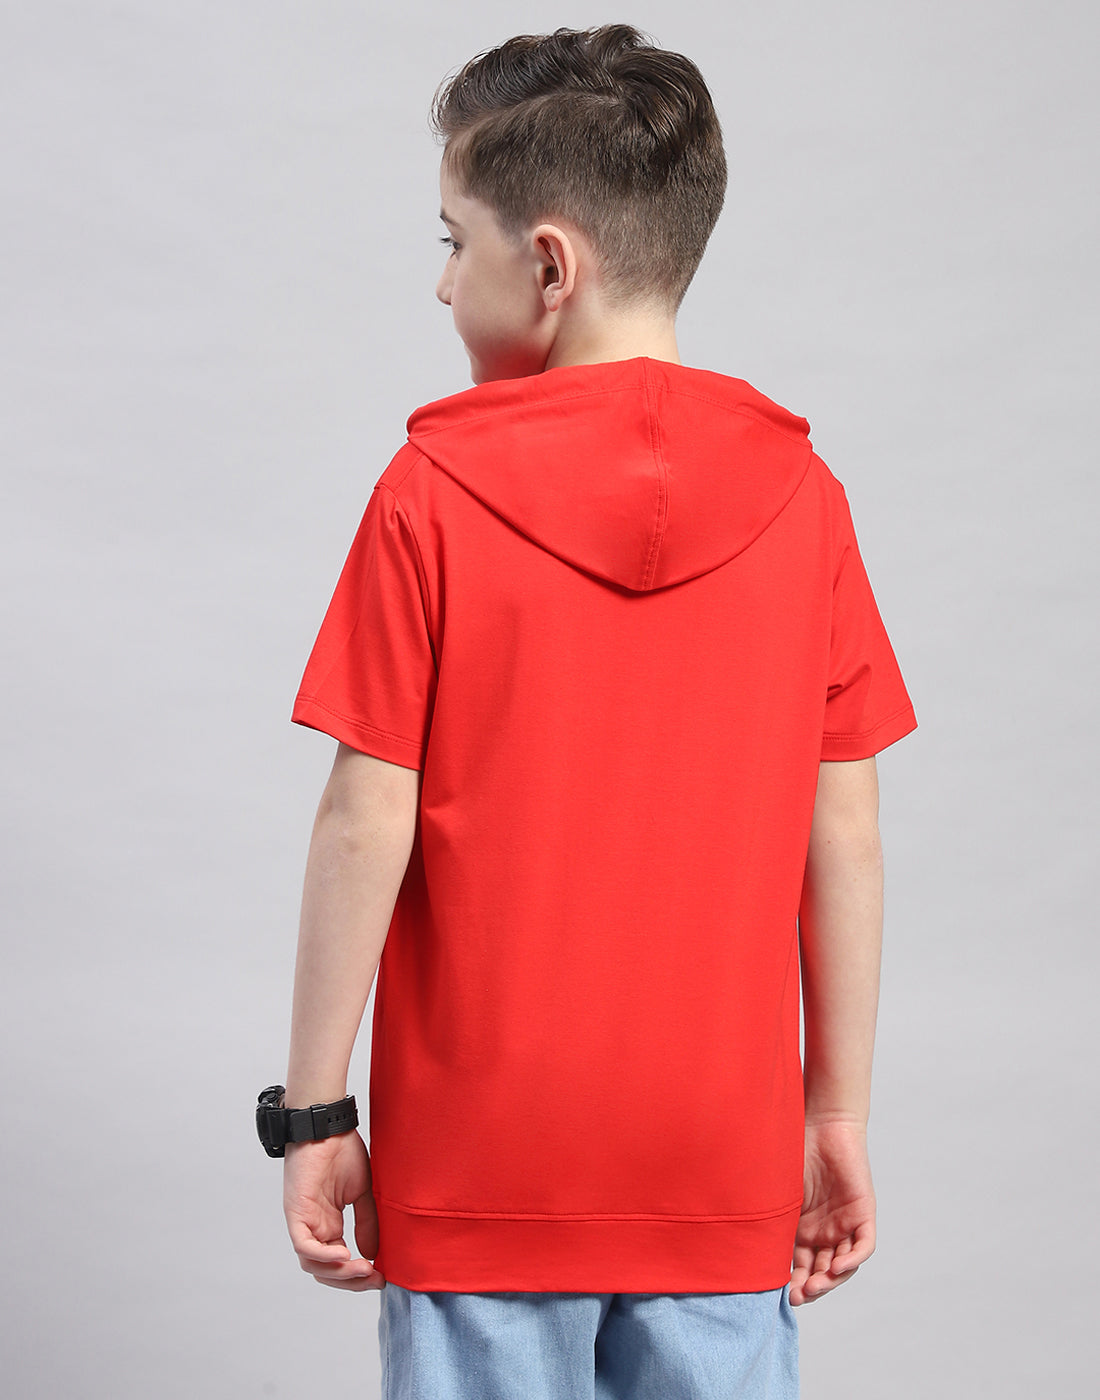 Boys Red Printed Hooded Half Sleeve T-Shirt